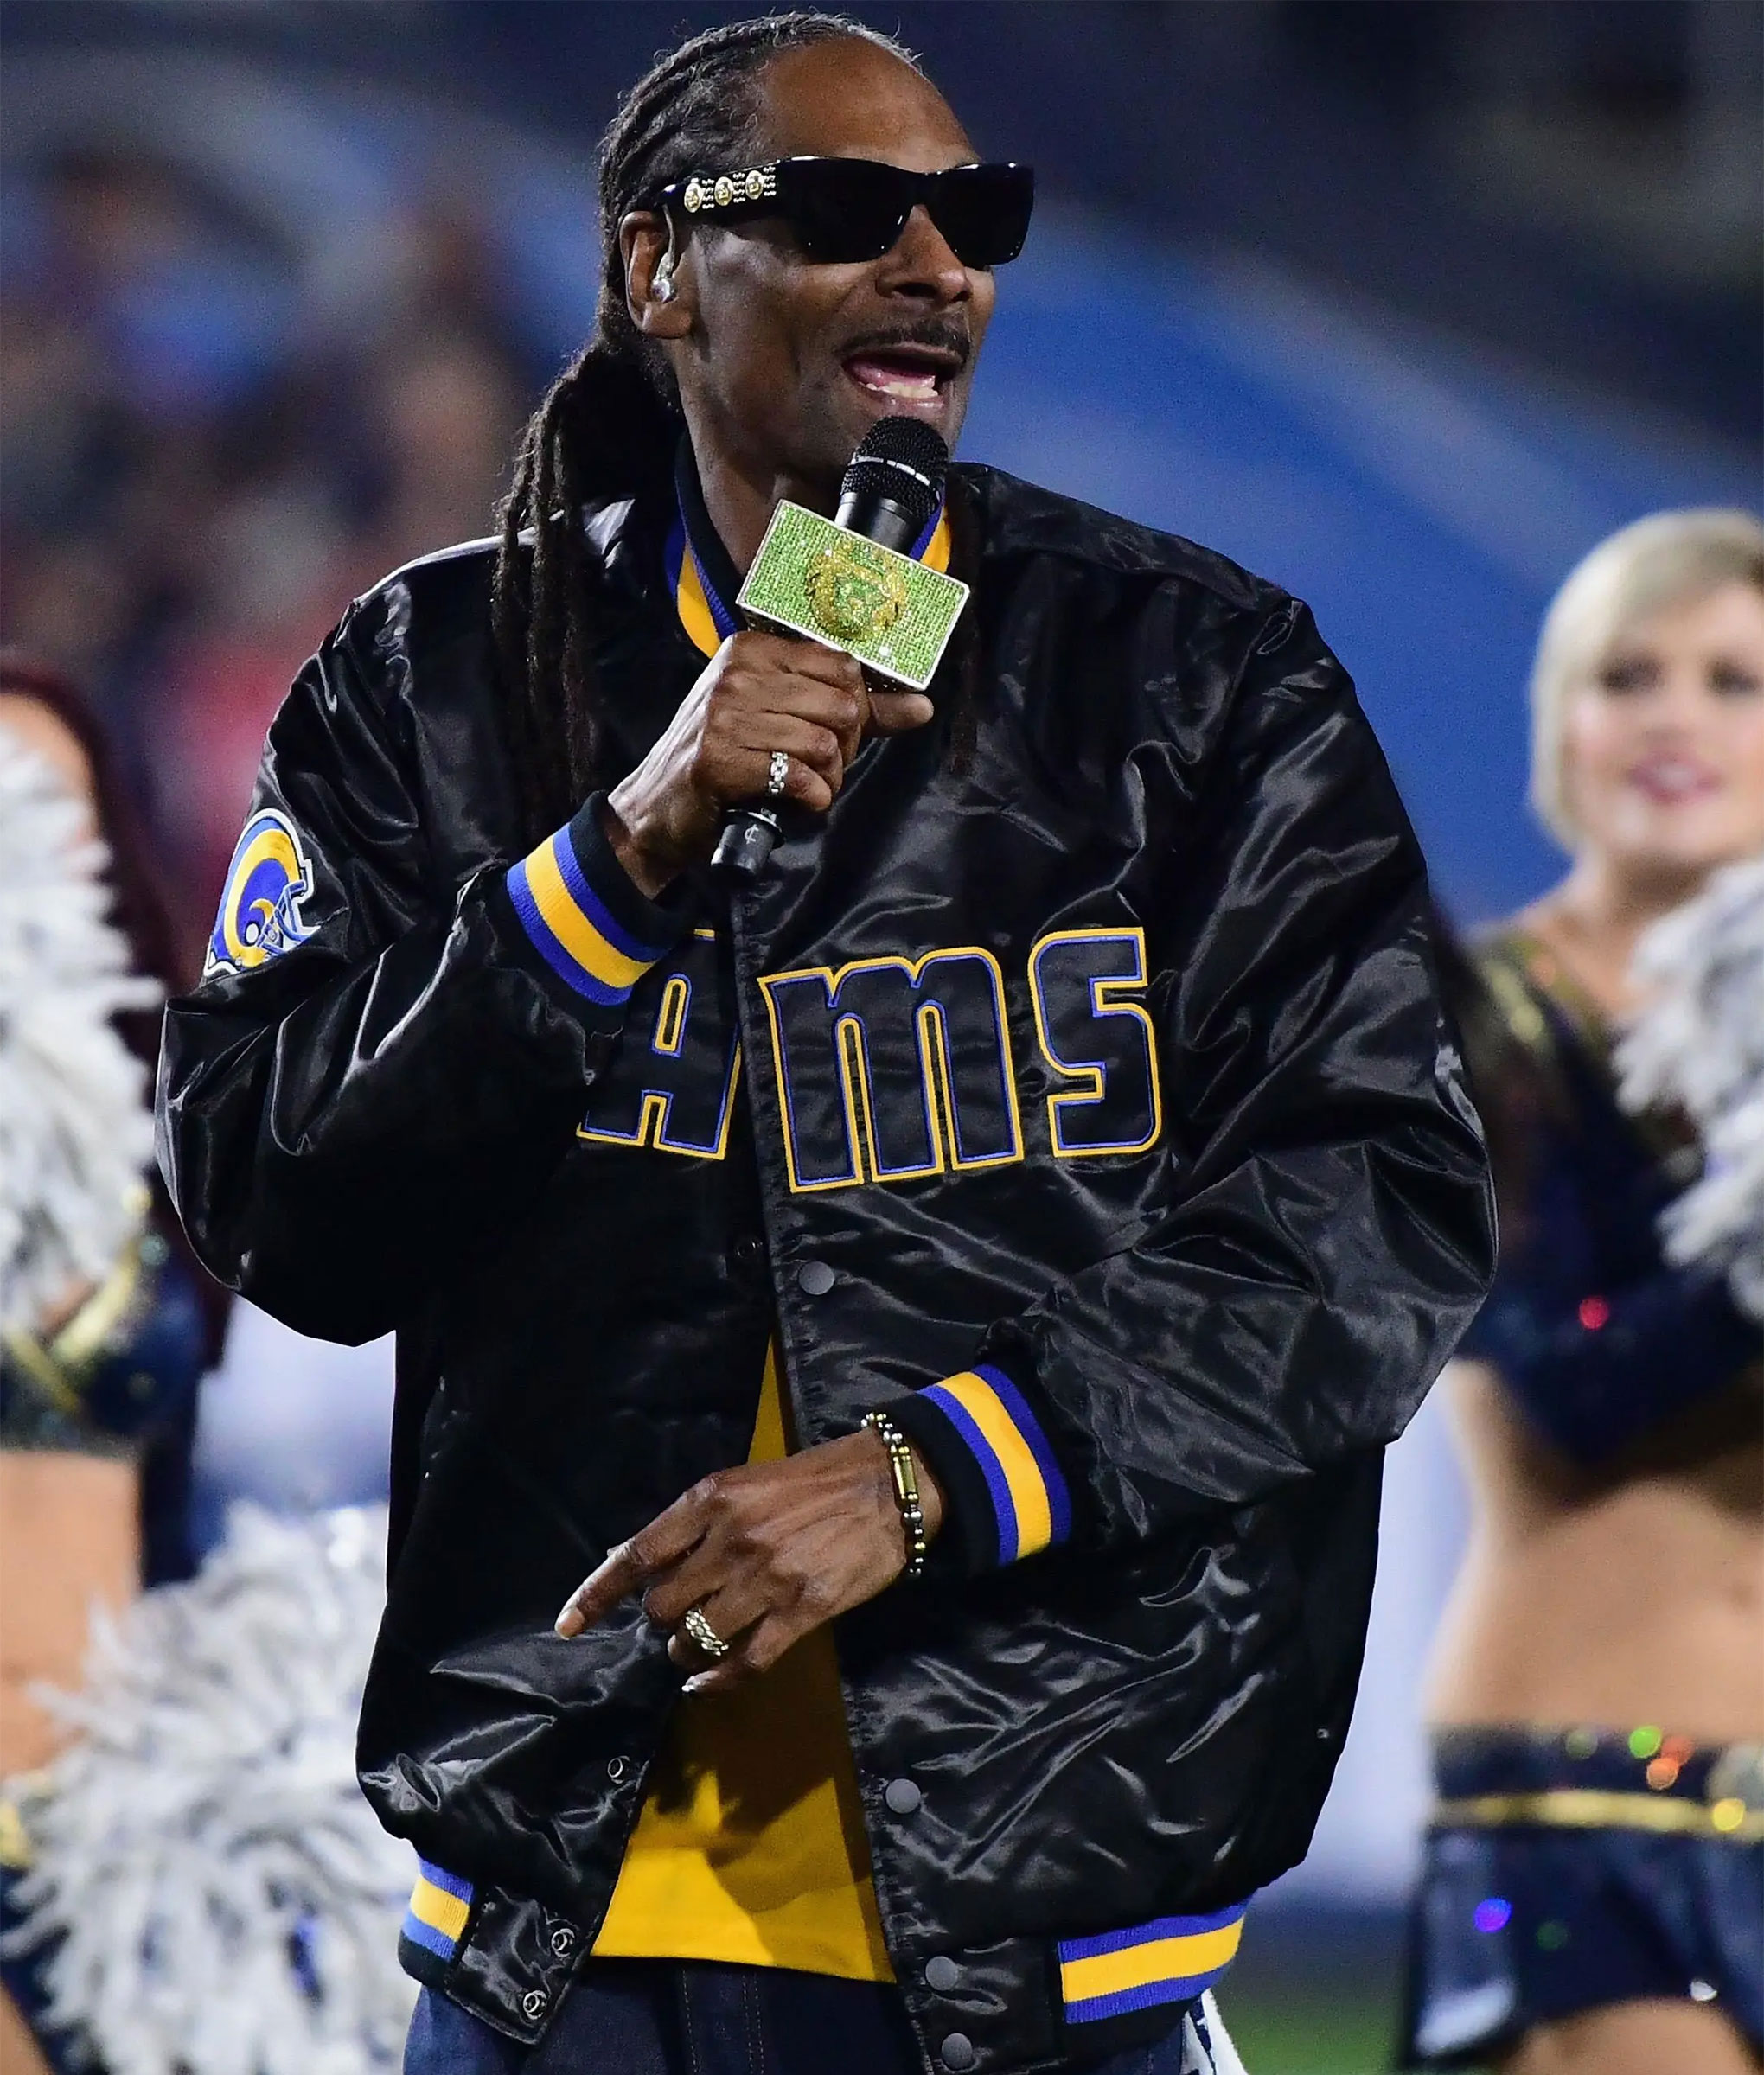 Snoop-Dogg-Black-Bomber-Jacket-(5)